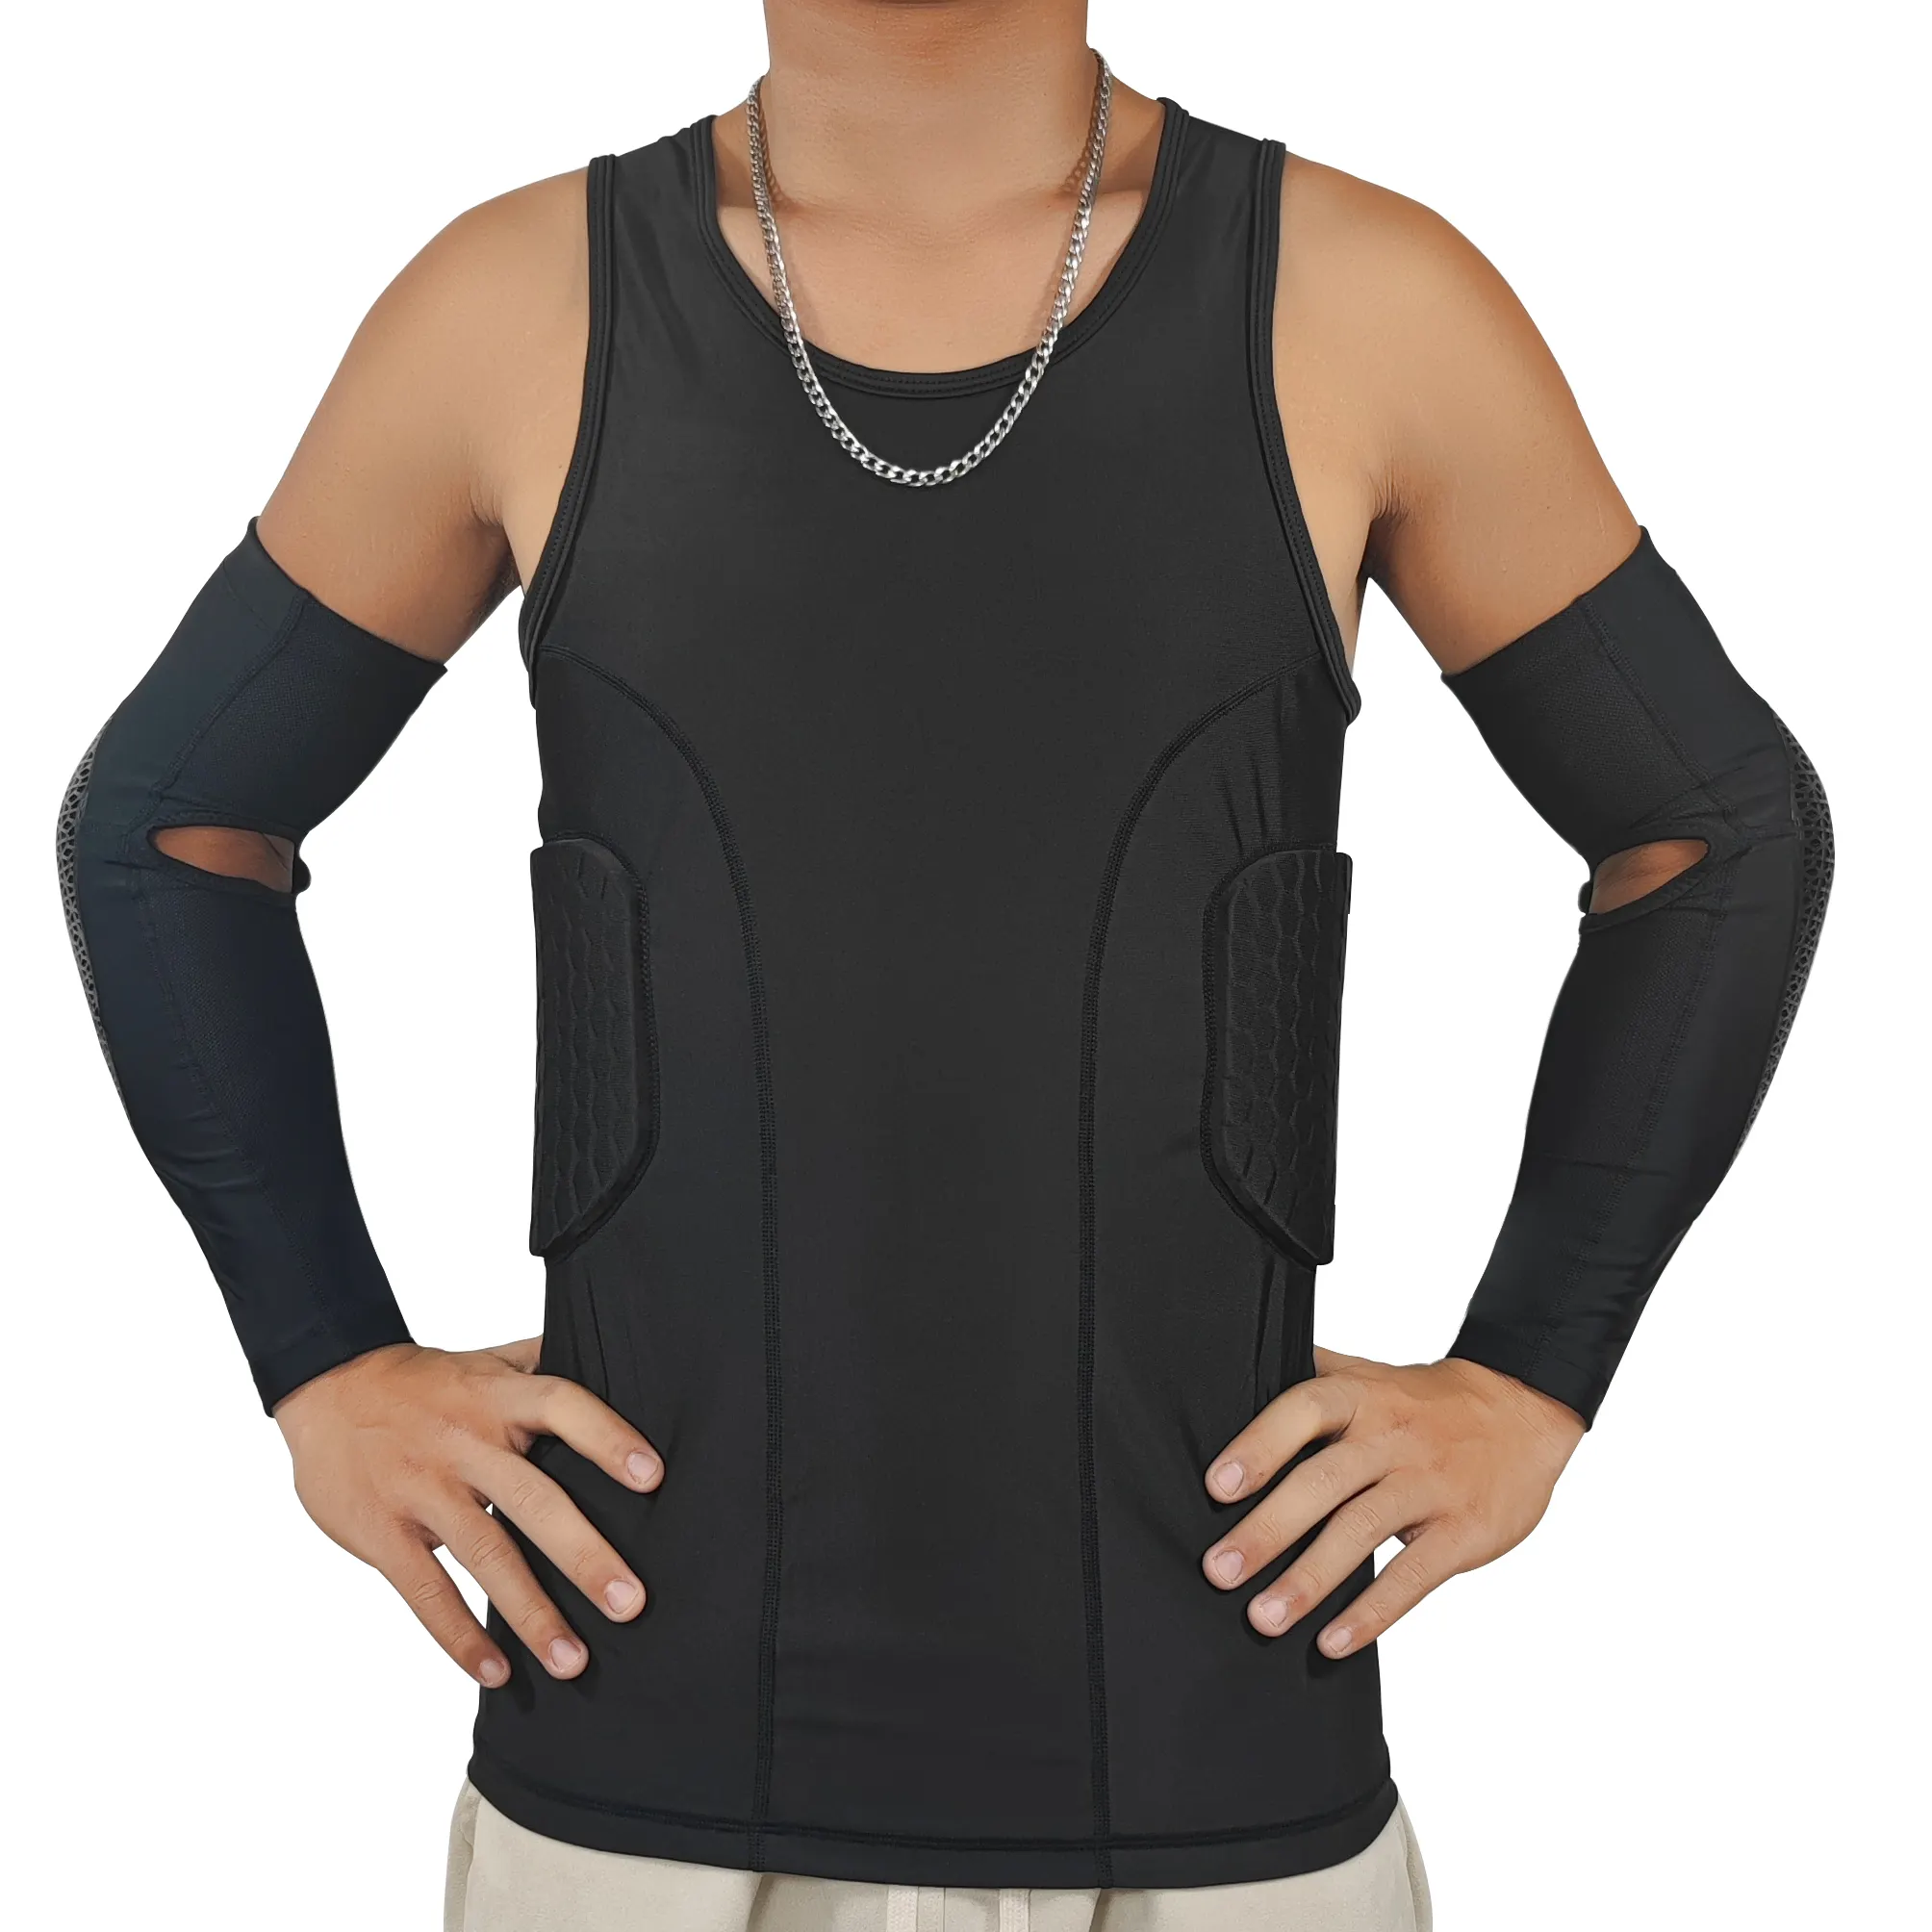 Men Sports Rash Guard Compression Padded Protective Shirt vest for Soccer Basketball Training